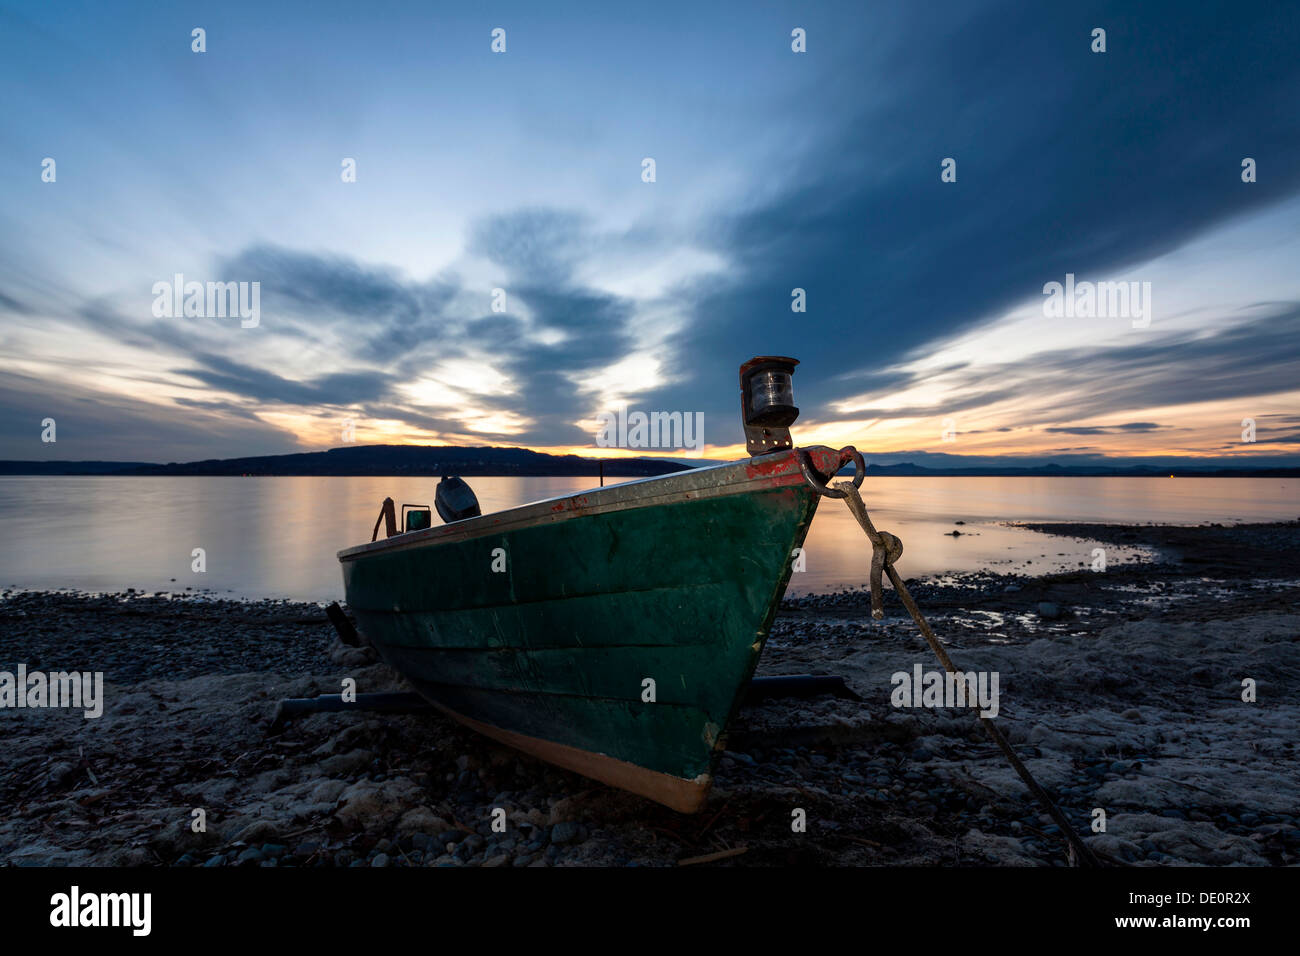 Fishing boat at dusk Stock Photo